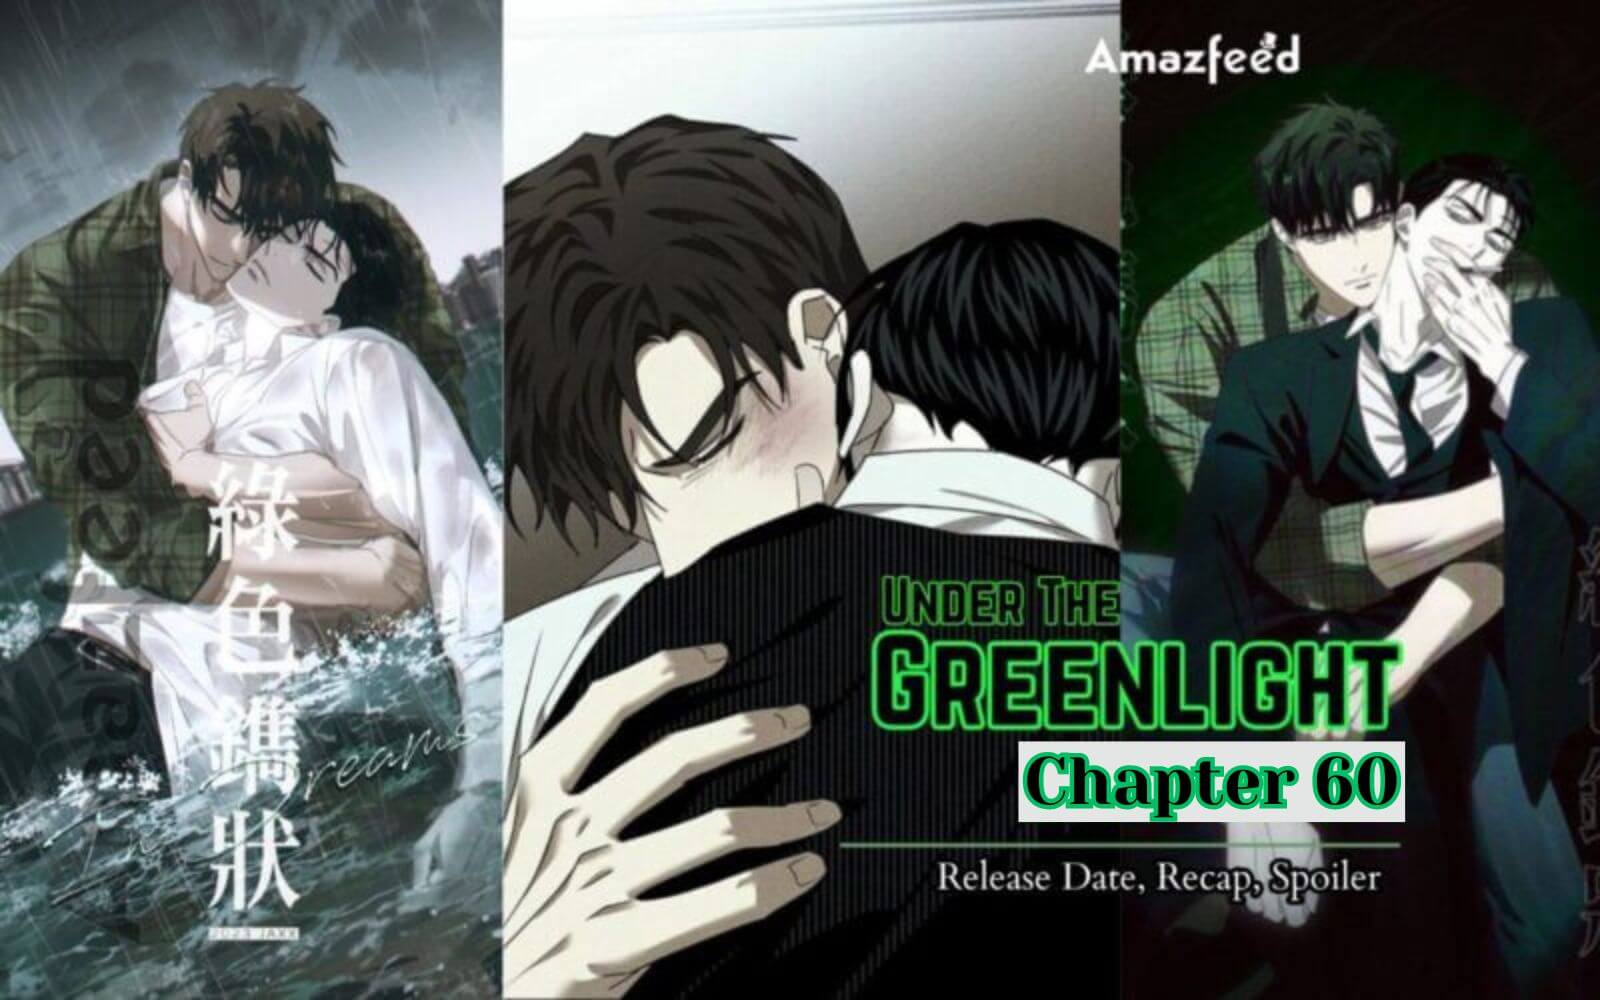 Under The Greenlight Chapter 60 spoiler